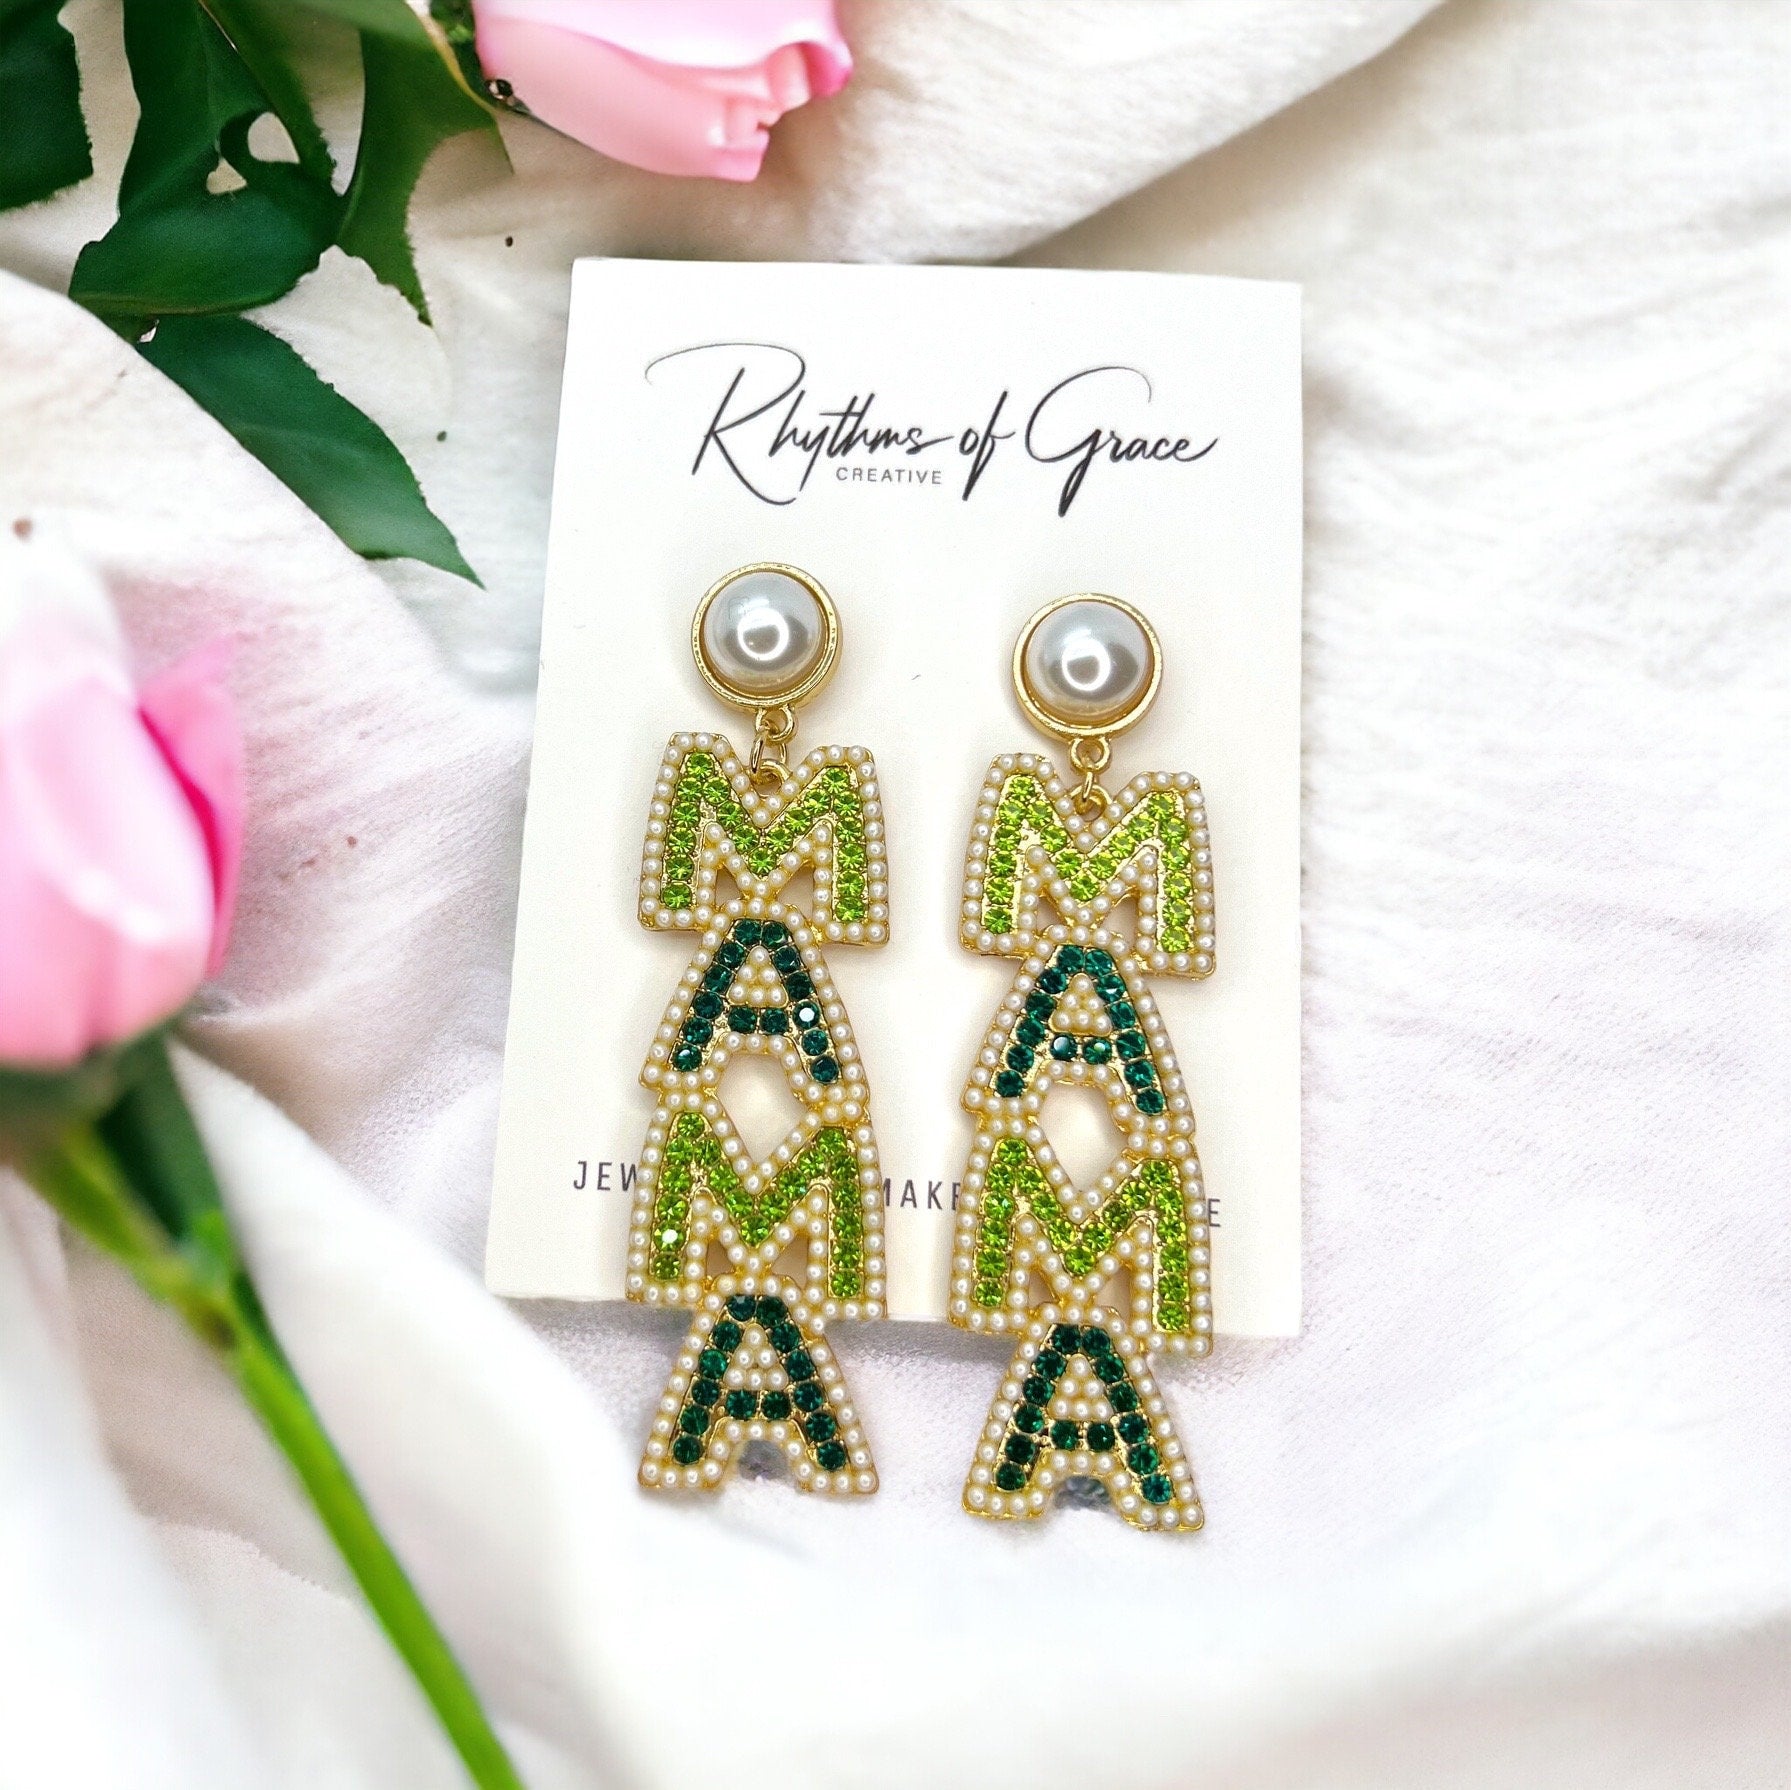 Rhinestone MAMA Earrings - Handmade Earrings, Baby Shower, New Mom, Mother’s Day, Mom Earringa, Momma Earrings, Pregnancy Announcement